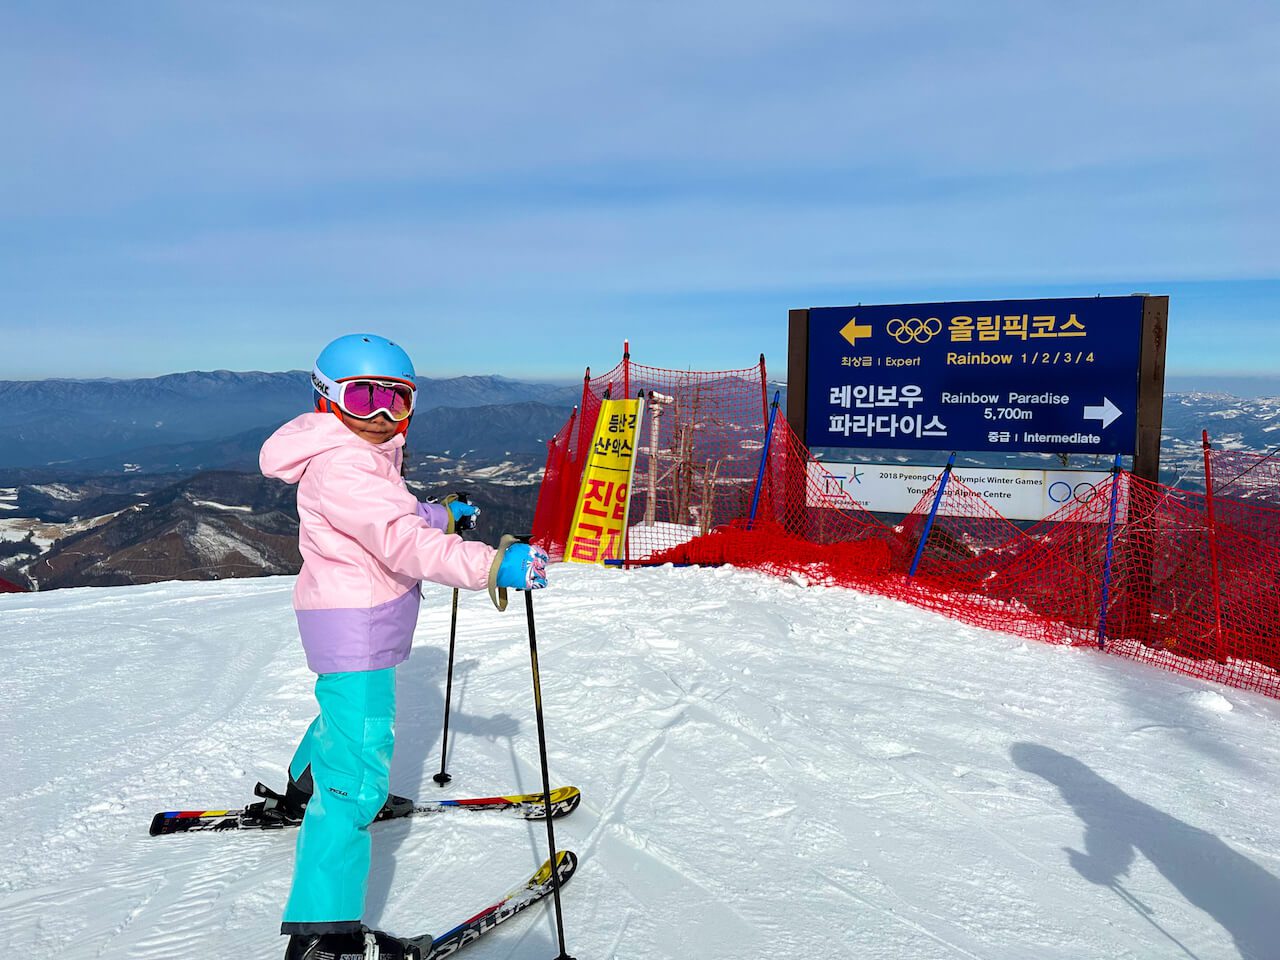 ski resorts in korea | yongpyong ski resort